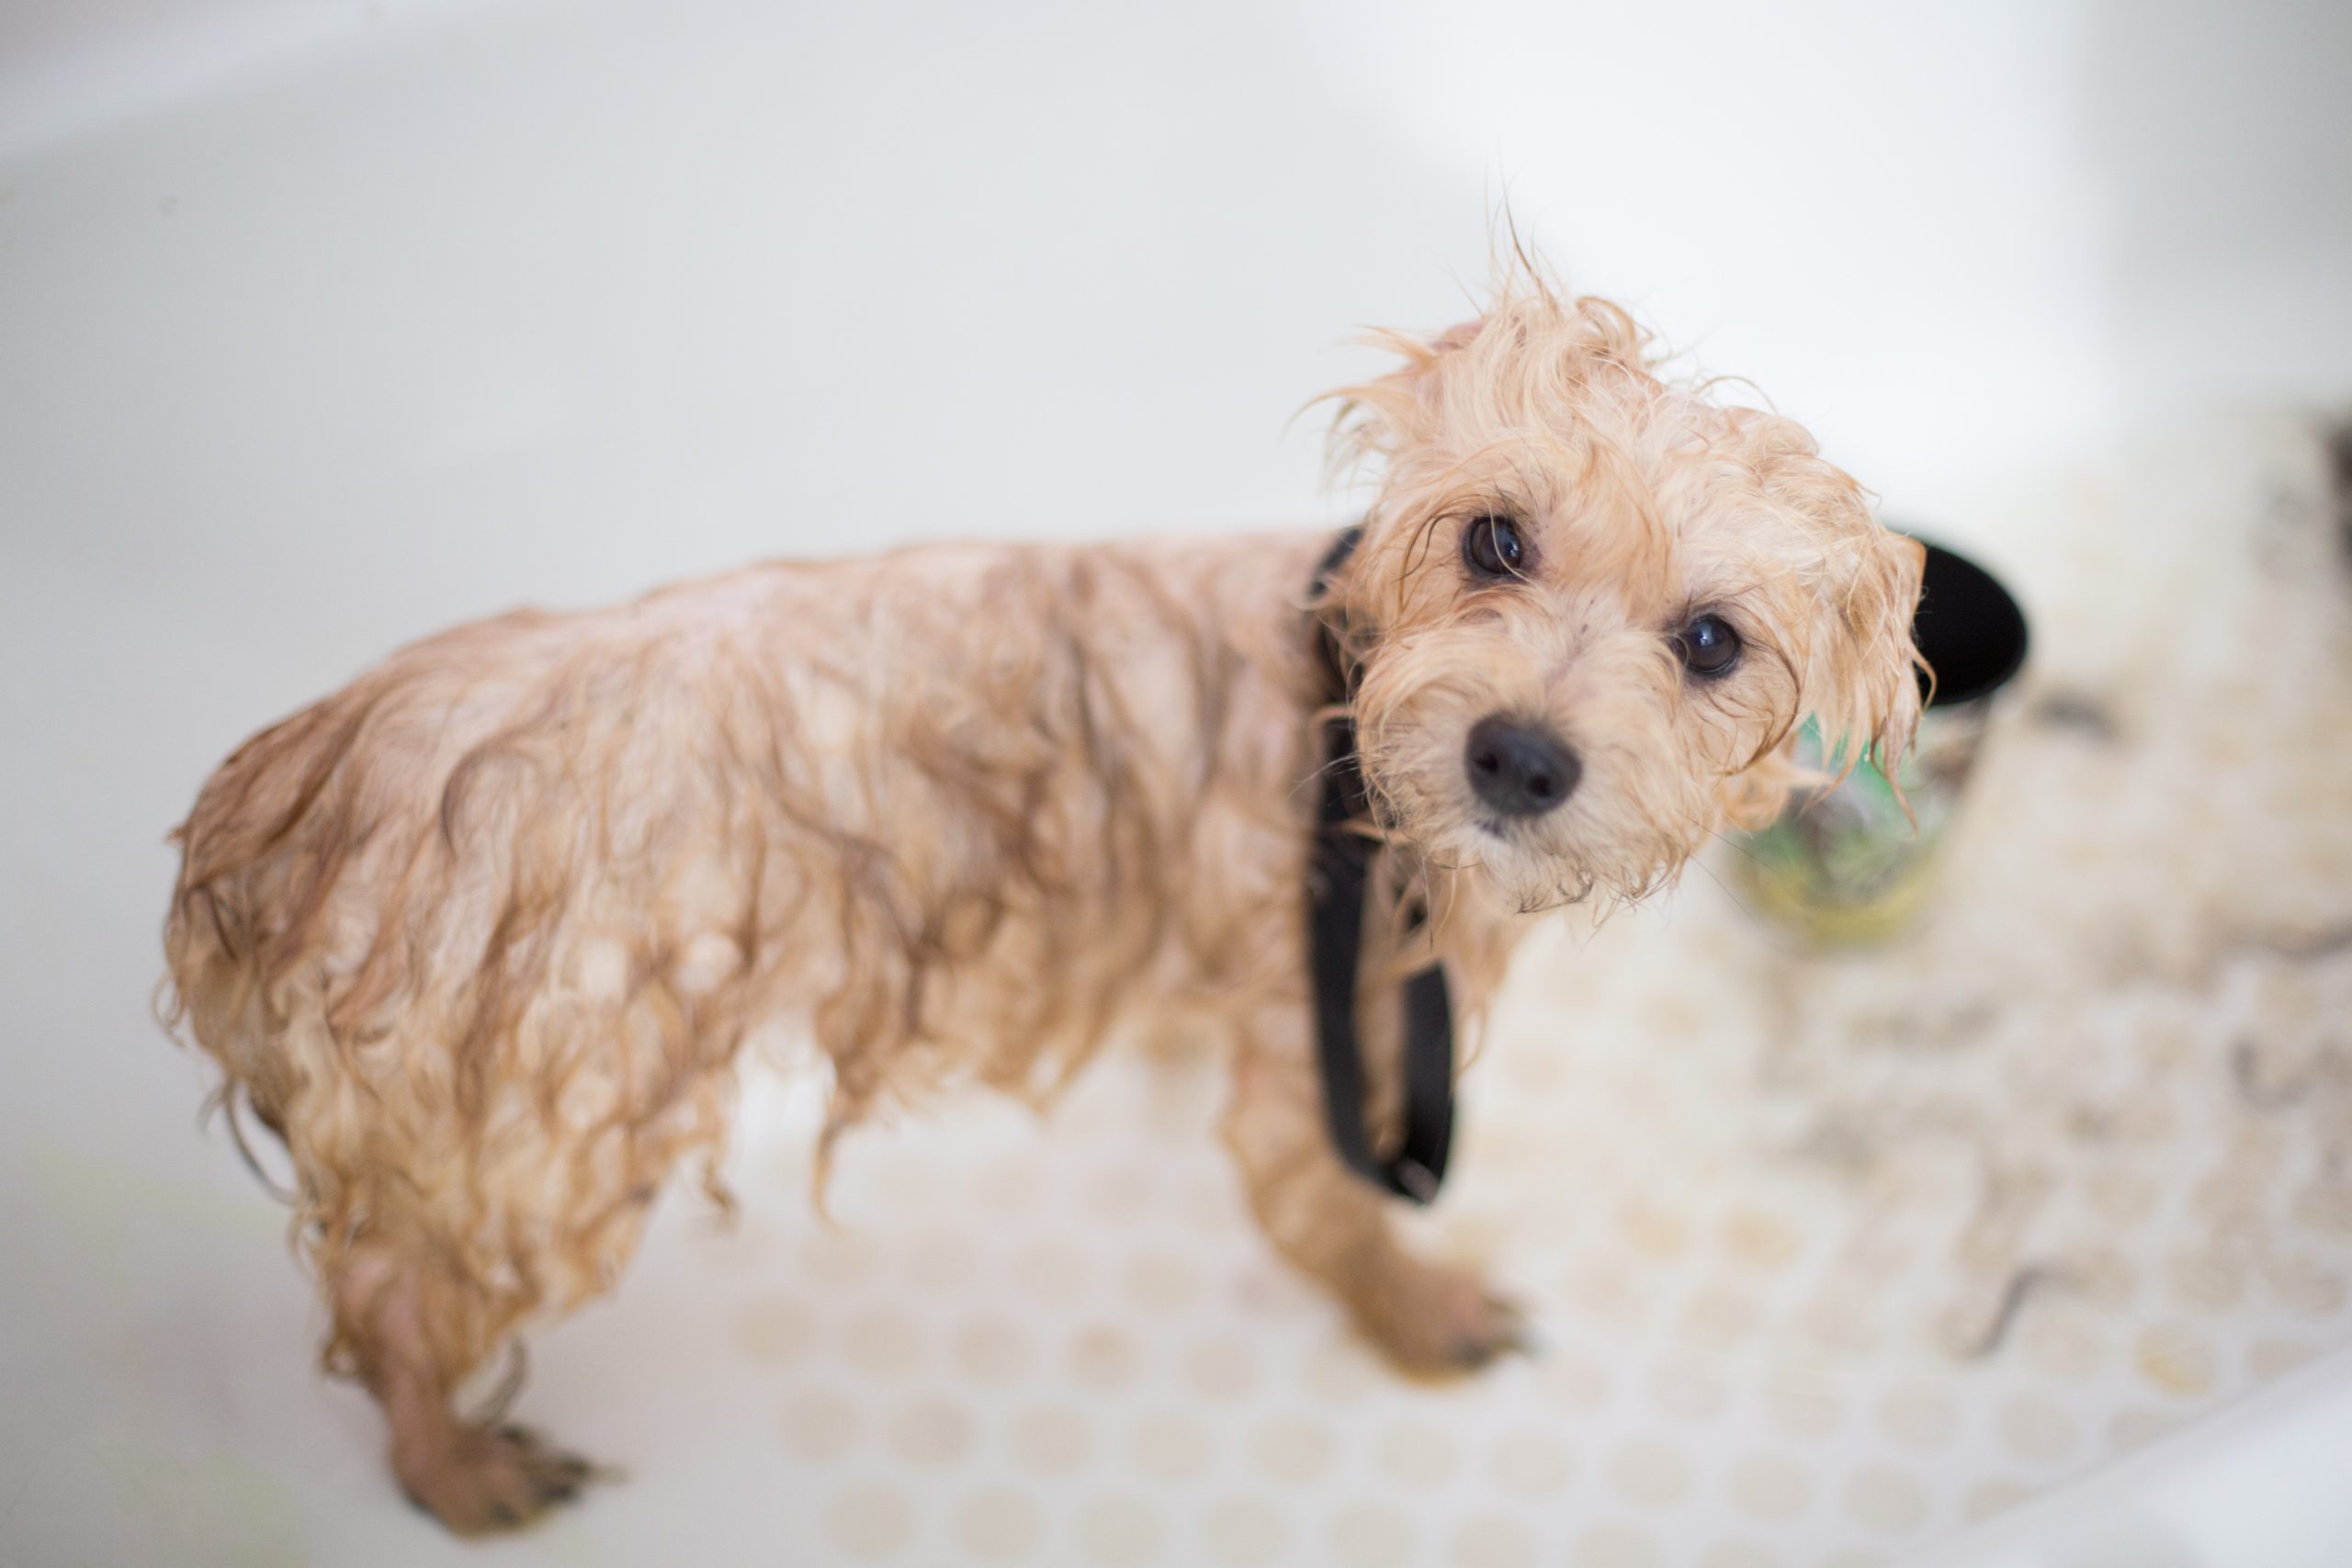 Wet dog in a bathtub being washed